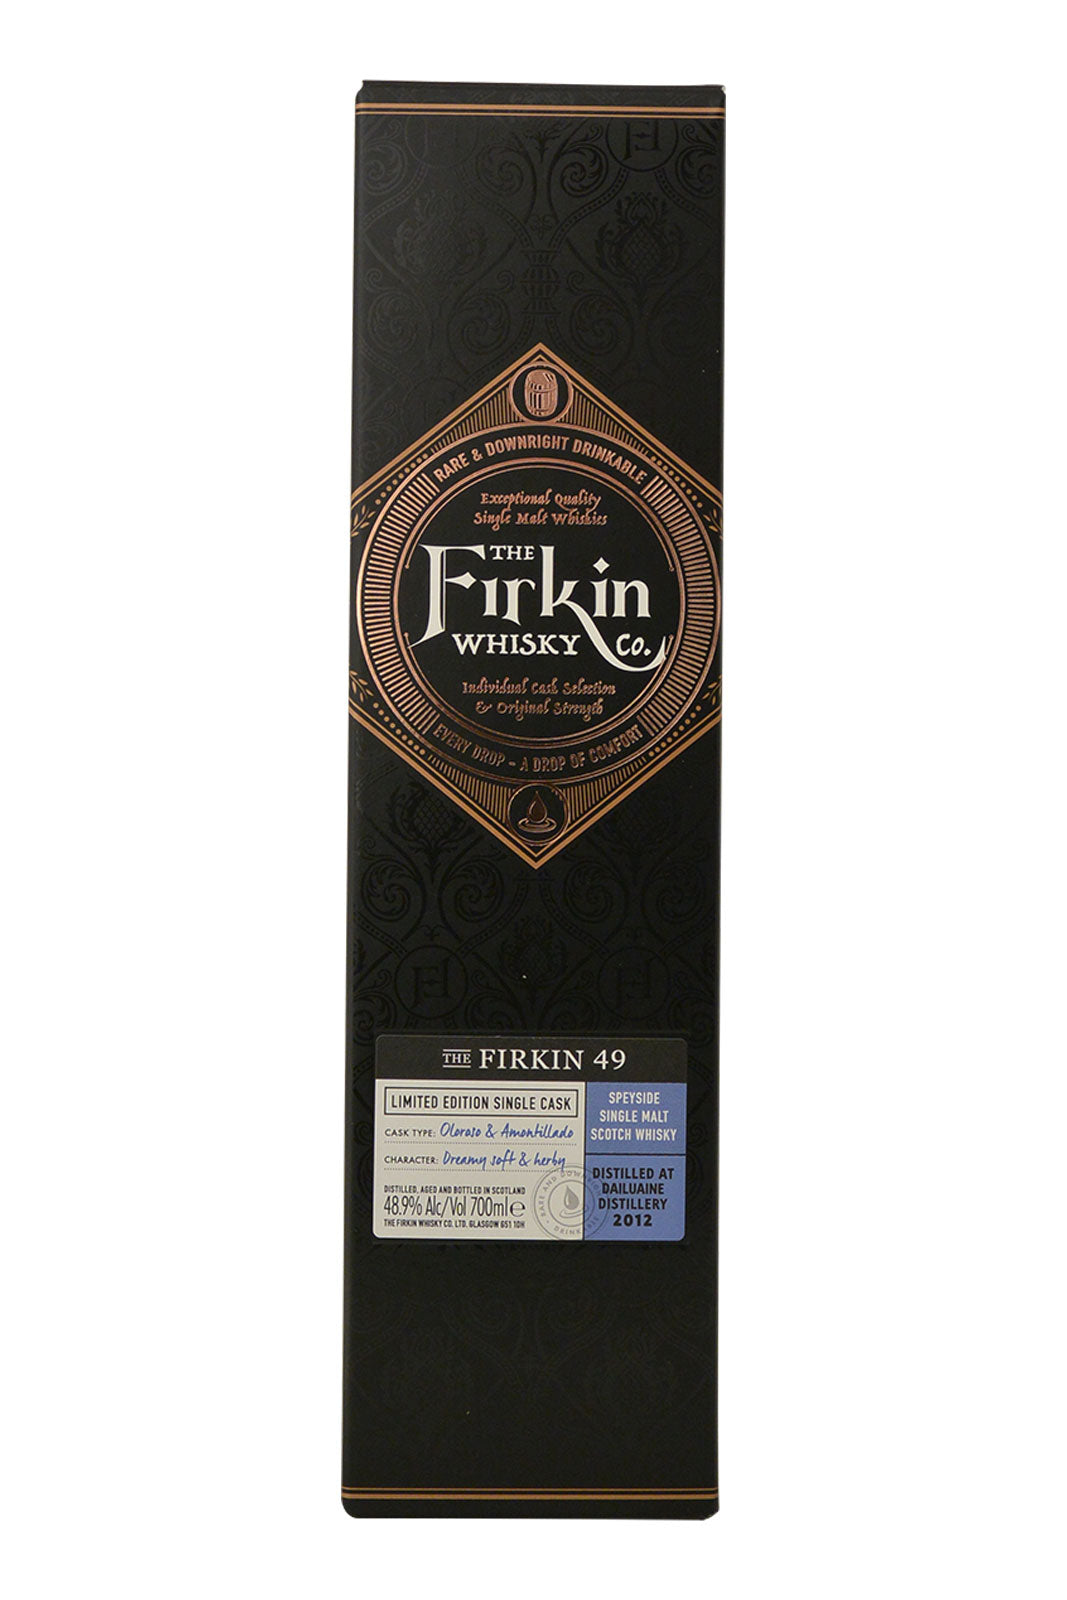 Firkin 49 Dailuaine 2012 Single Cask